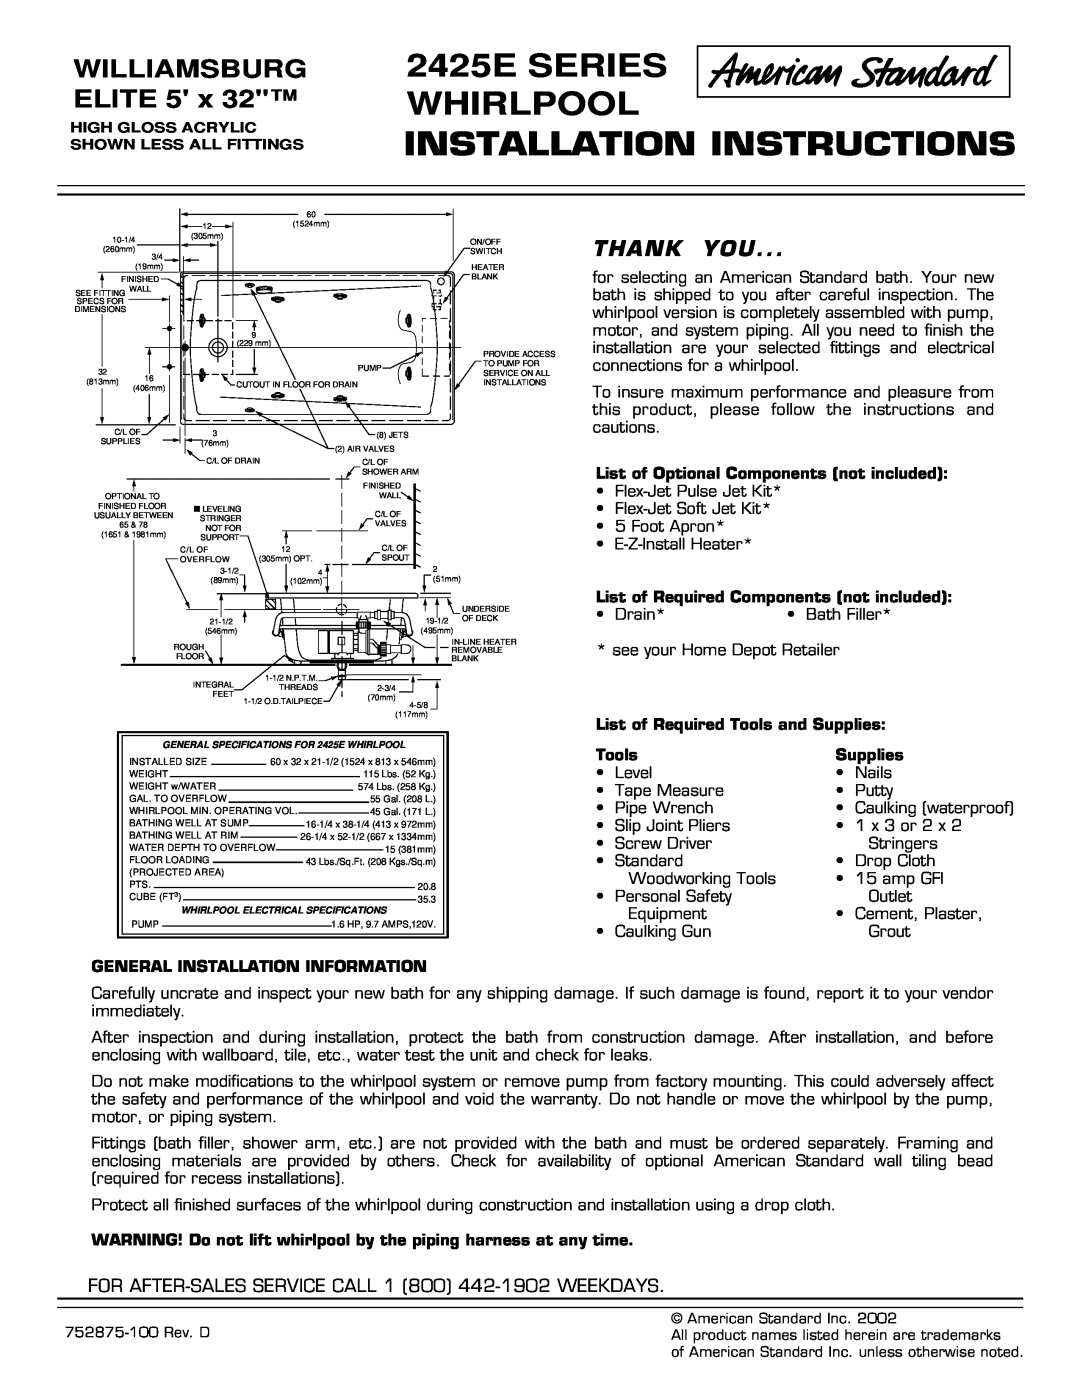 American Standard installation instructions 2425E SERIES WHIRLPOOL, Installation Instructions, WILLIAMSBURG ELITE 5 x 